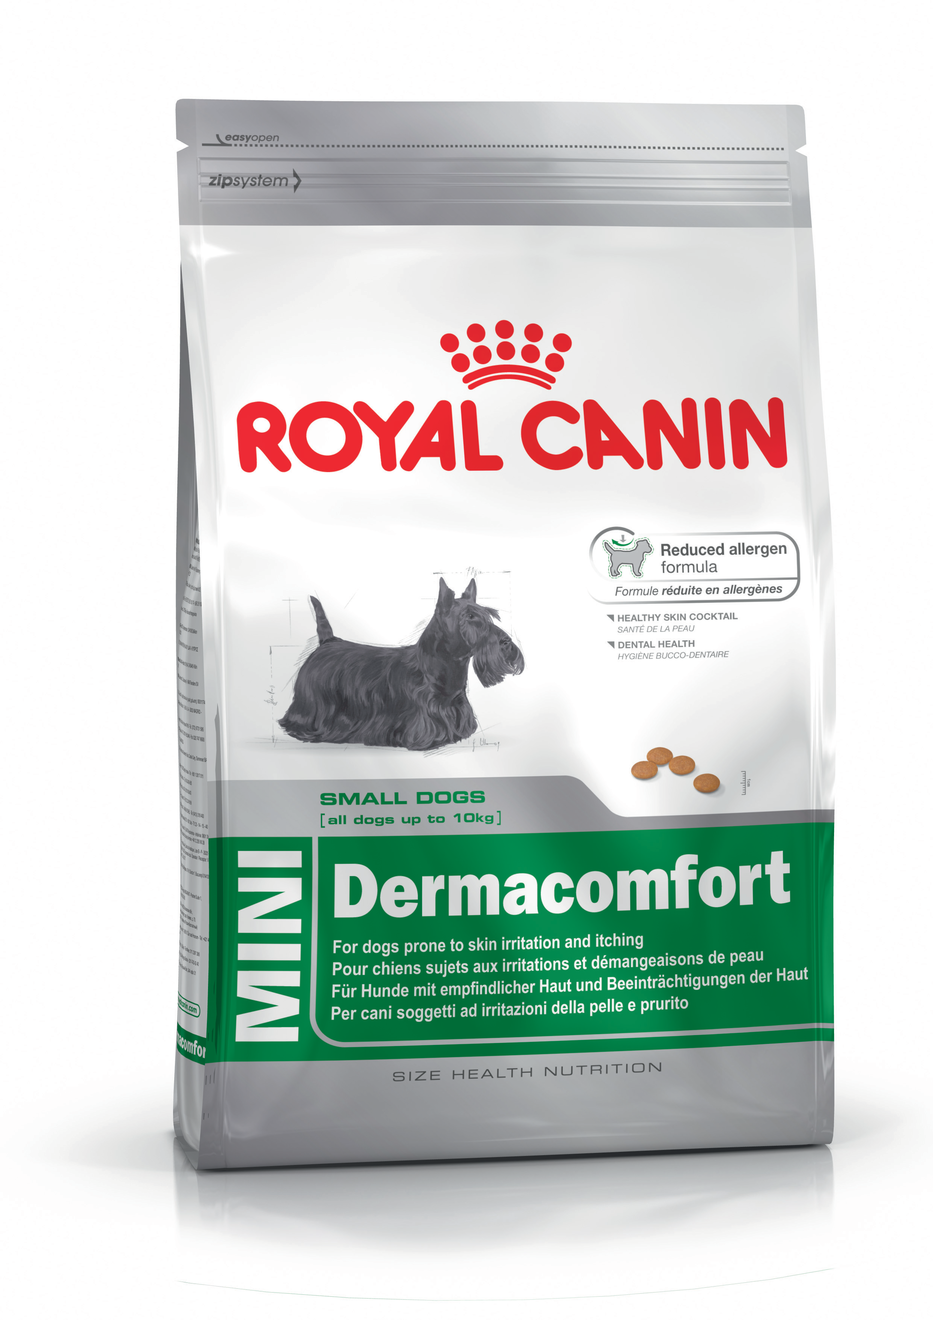 royal canin digestive care 10kg